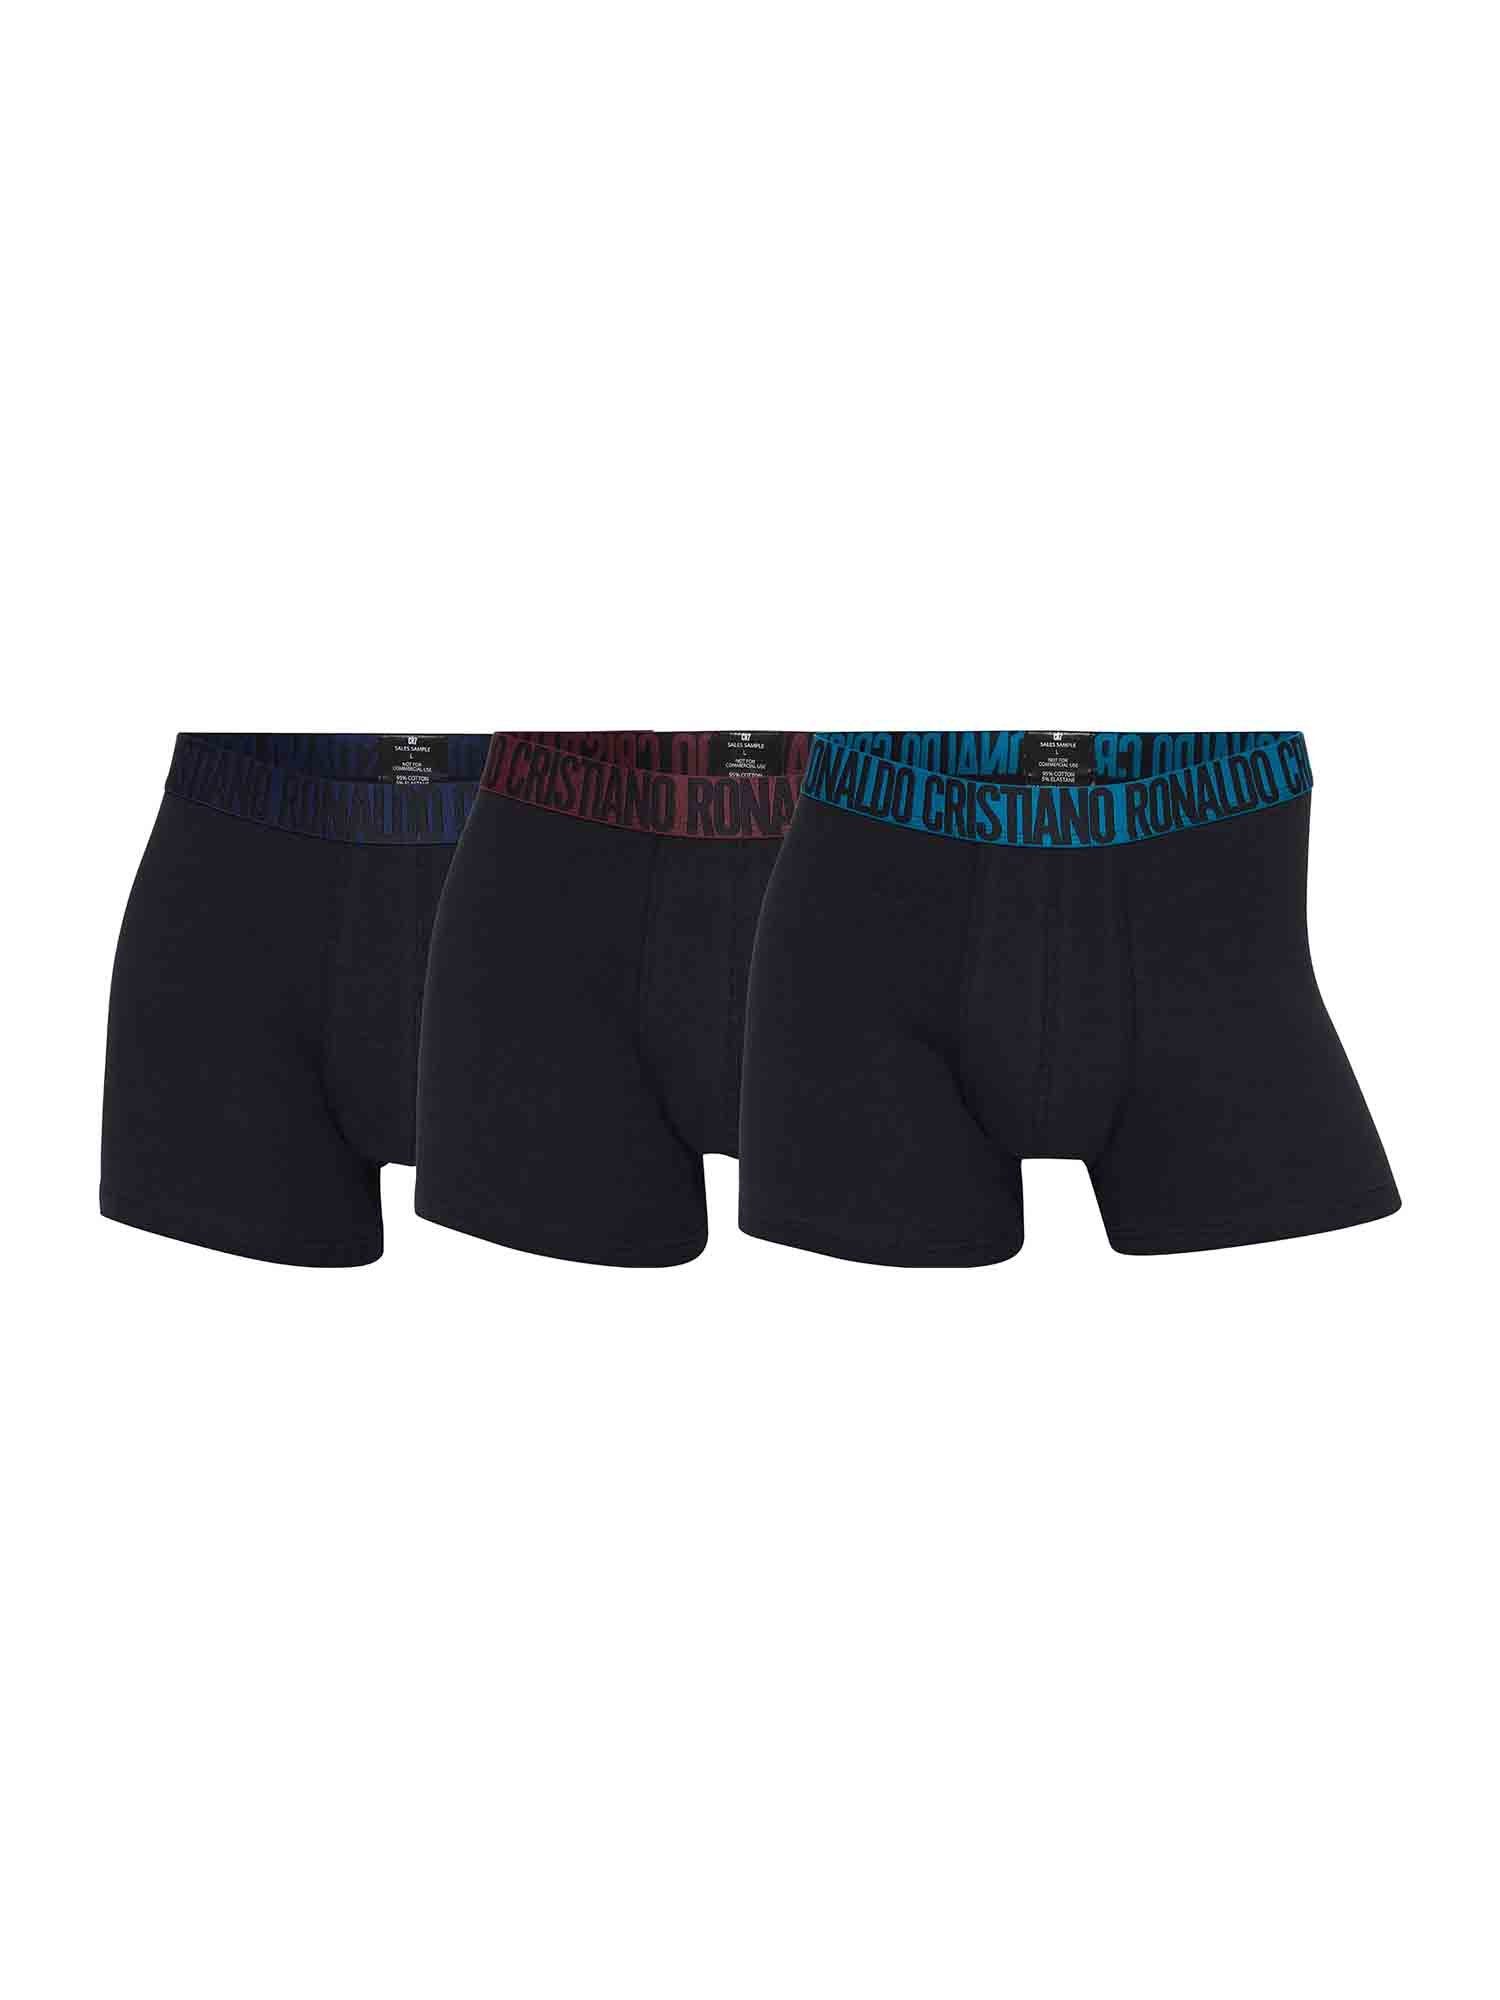 CR7 Retro Pants Herren Männer Boxershorts Retro Pants Trunks Multipack (3-St) Multi 13